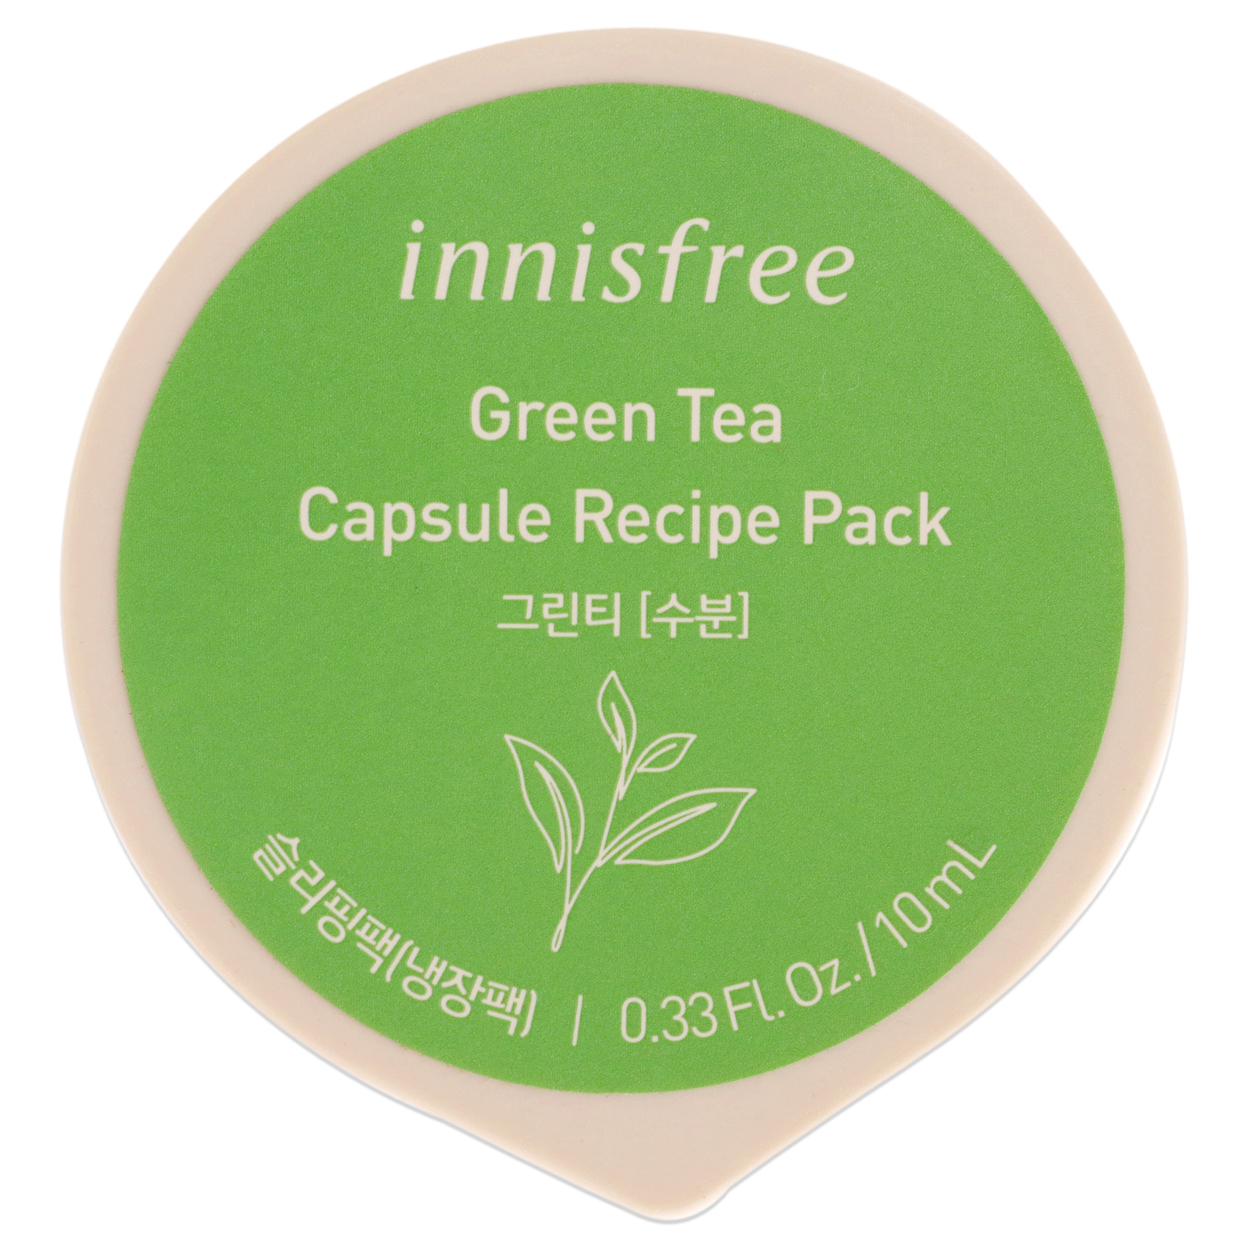 Innisfree Capsule Recipe Pack Mask - Green Tea 0.33 Oz